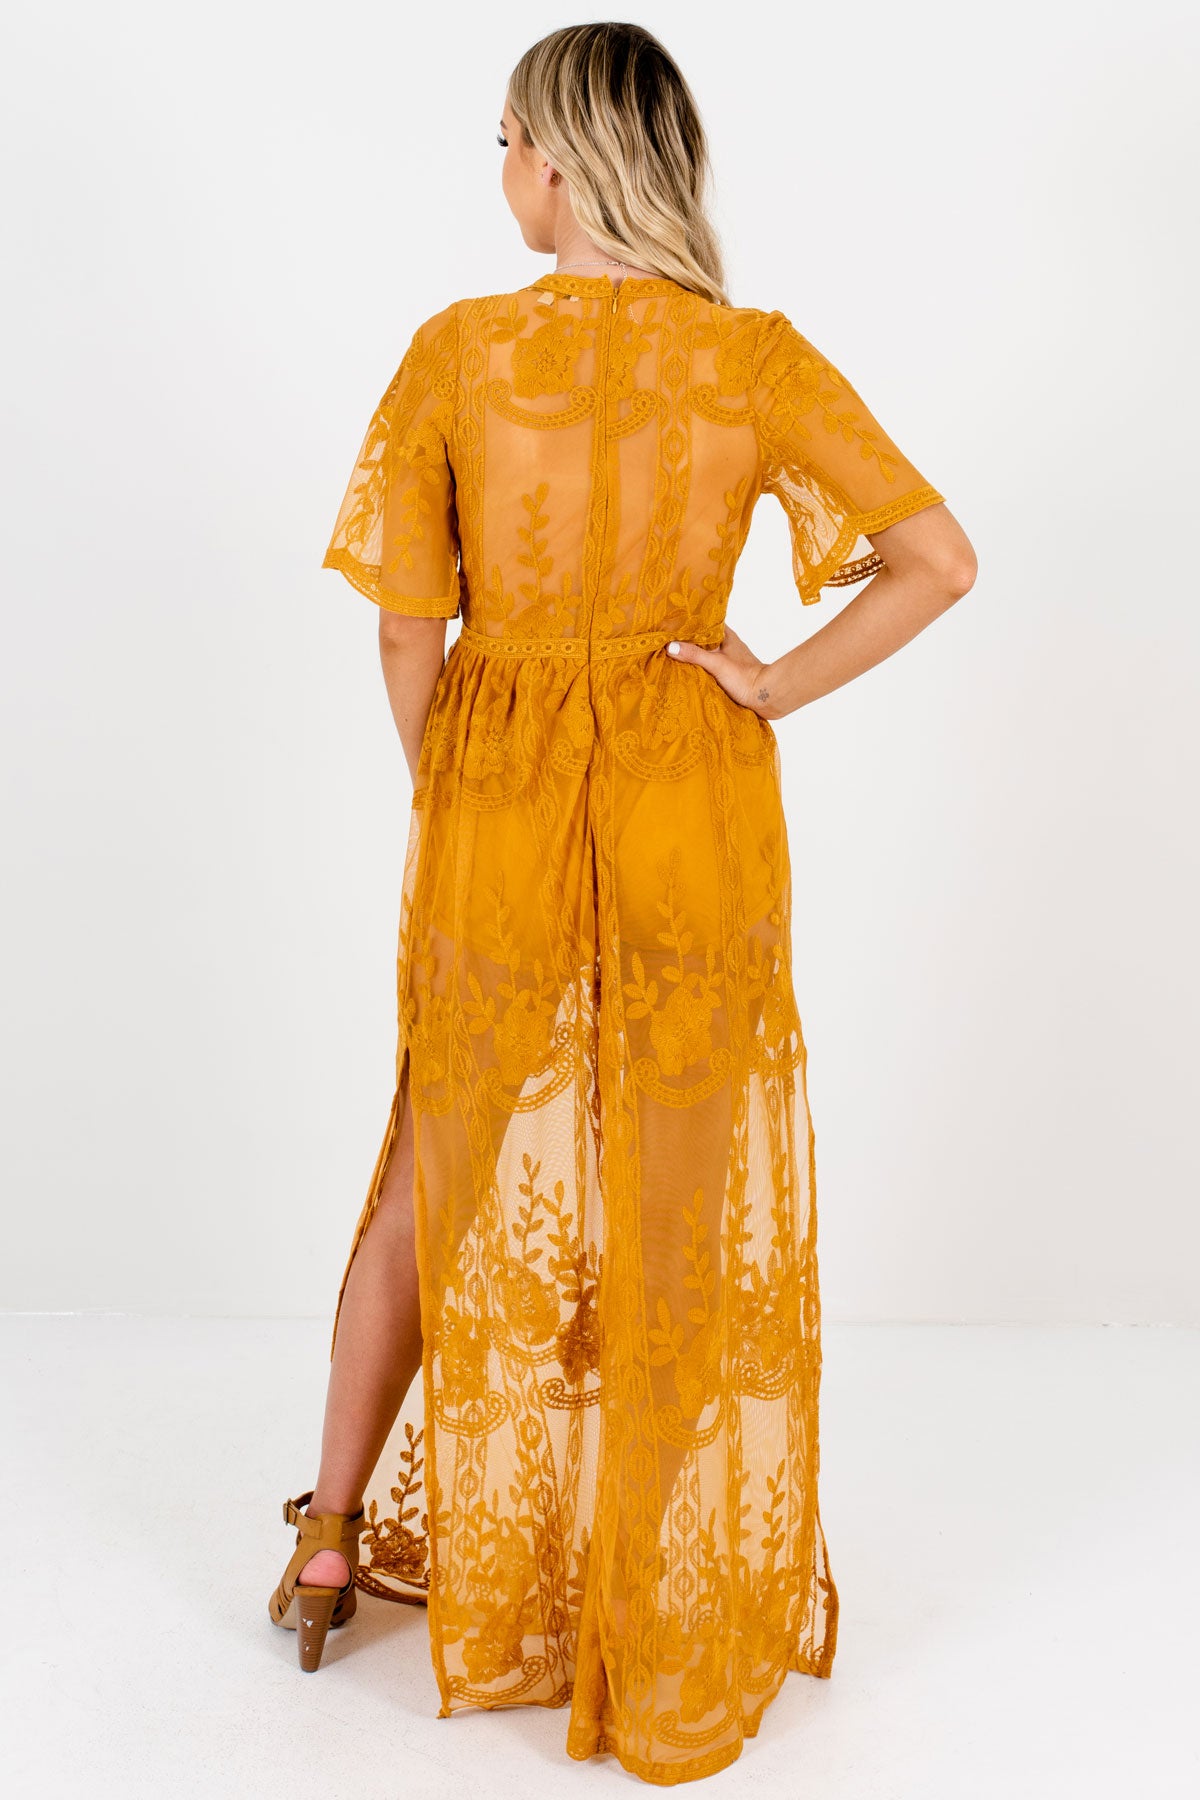 yellow lace romper dress